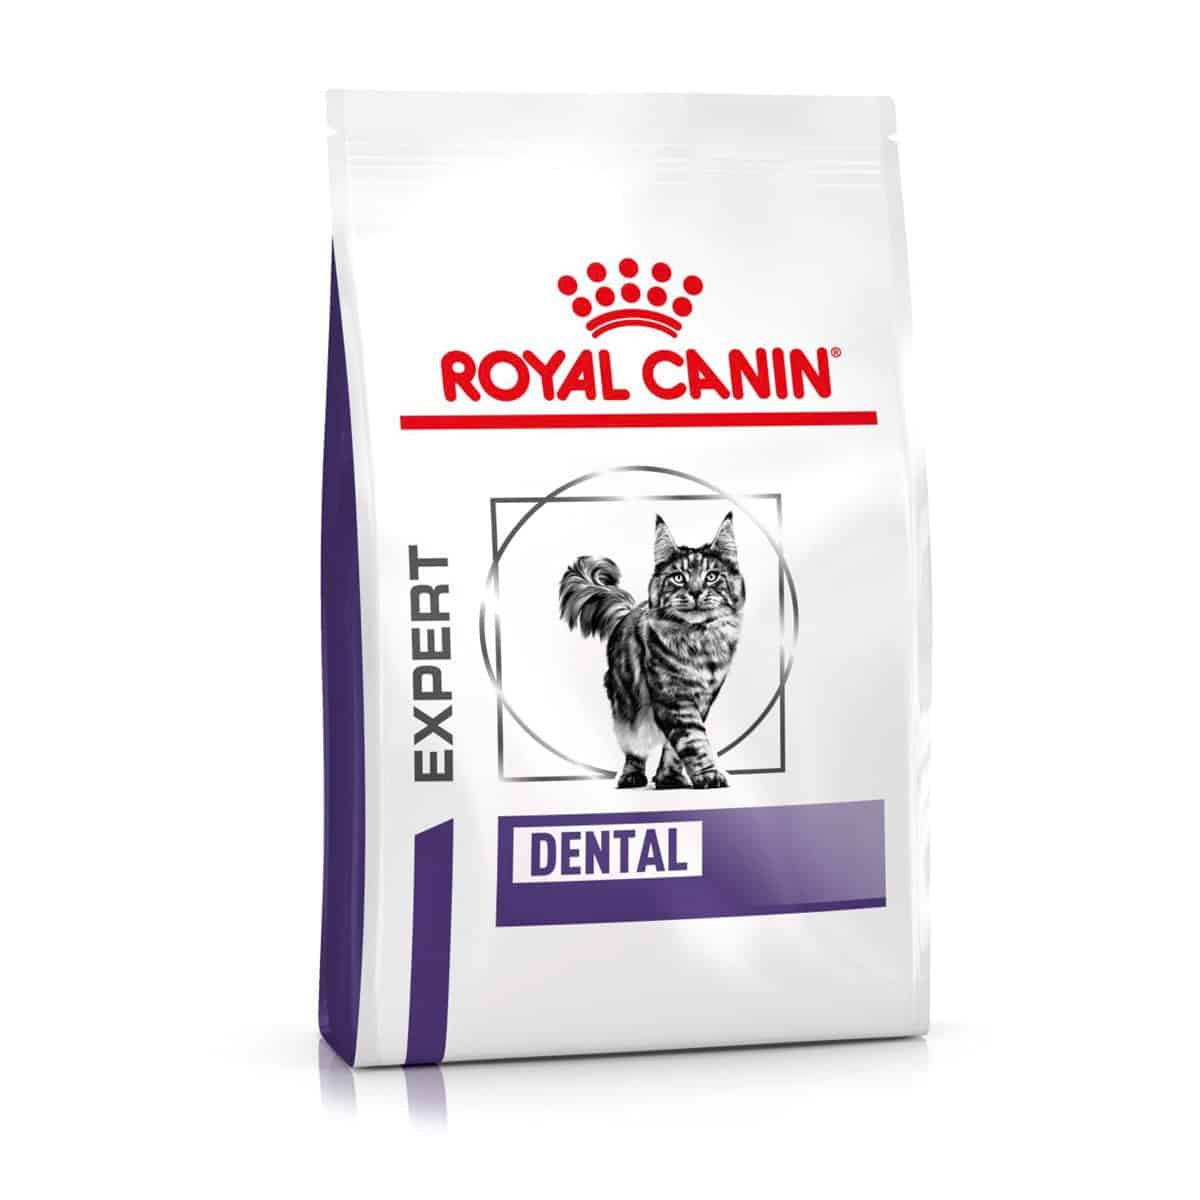 ROYAL CANIN® Expert DENTAL Trockenfutter für Katzen 3kg